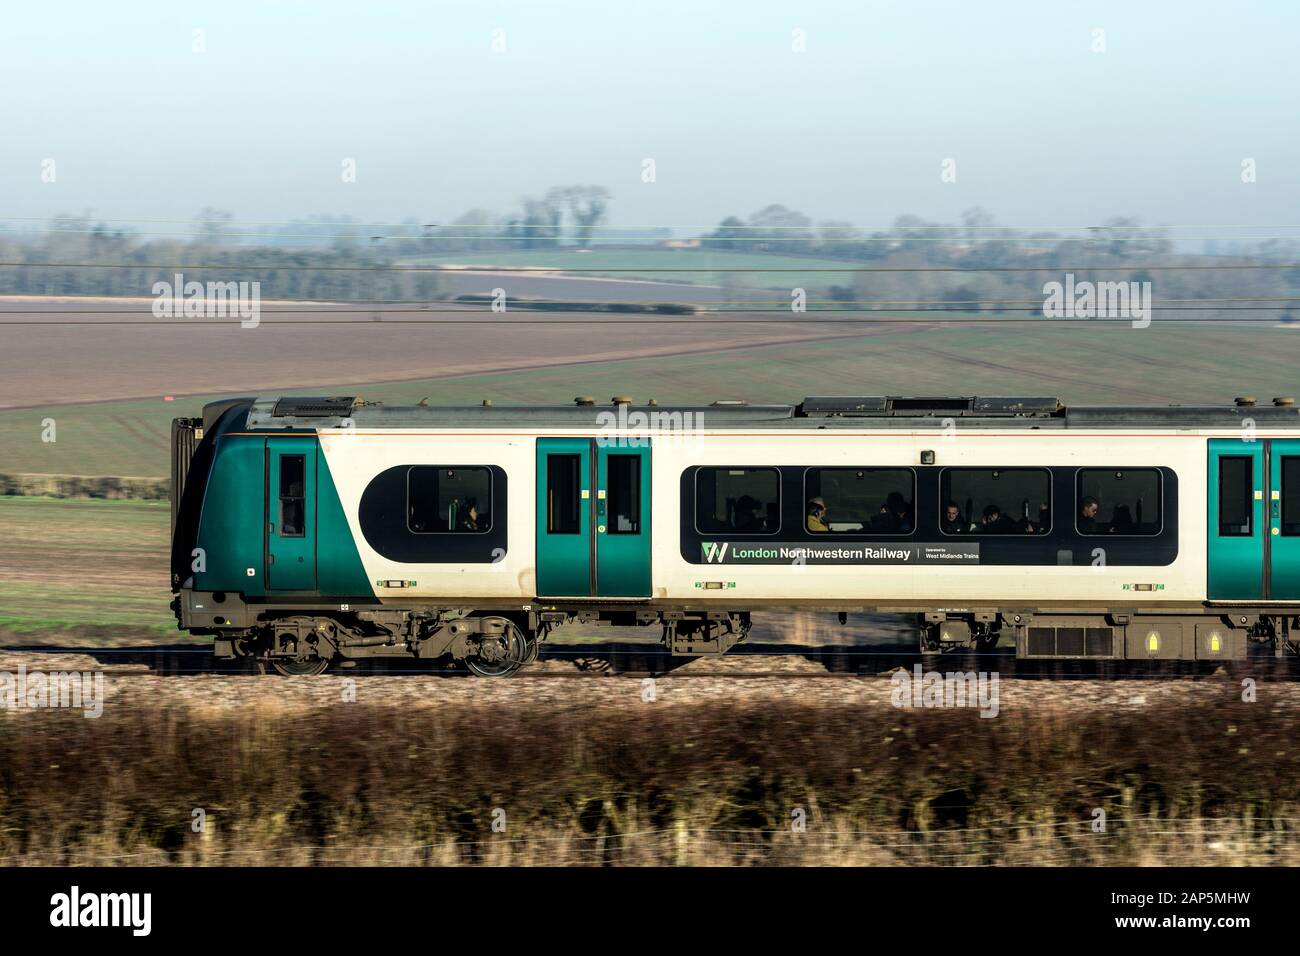 London NorthWestern Railway class 350 electric train on the West Coast Main Line, Warwickshire, UK Stock Photo